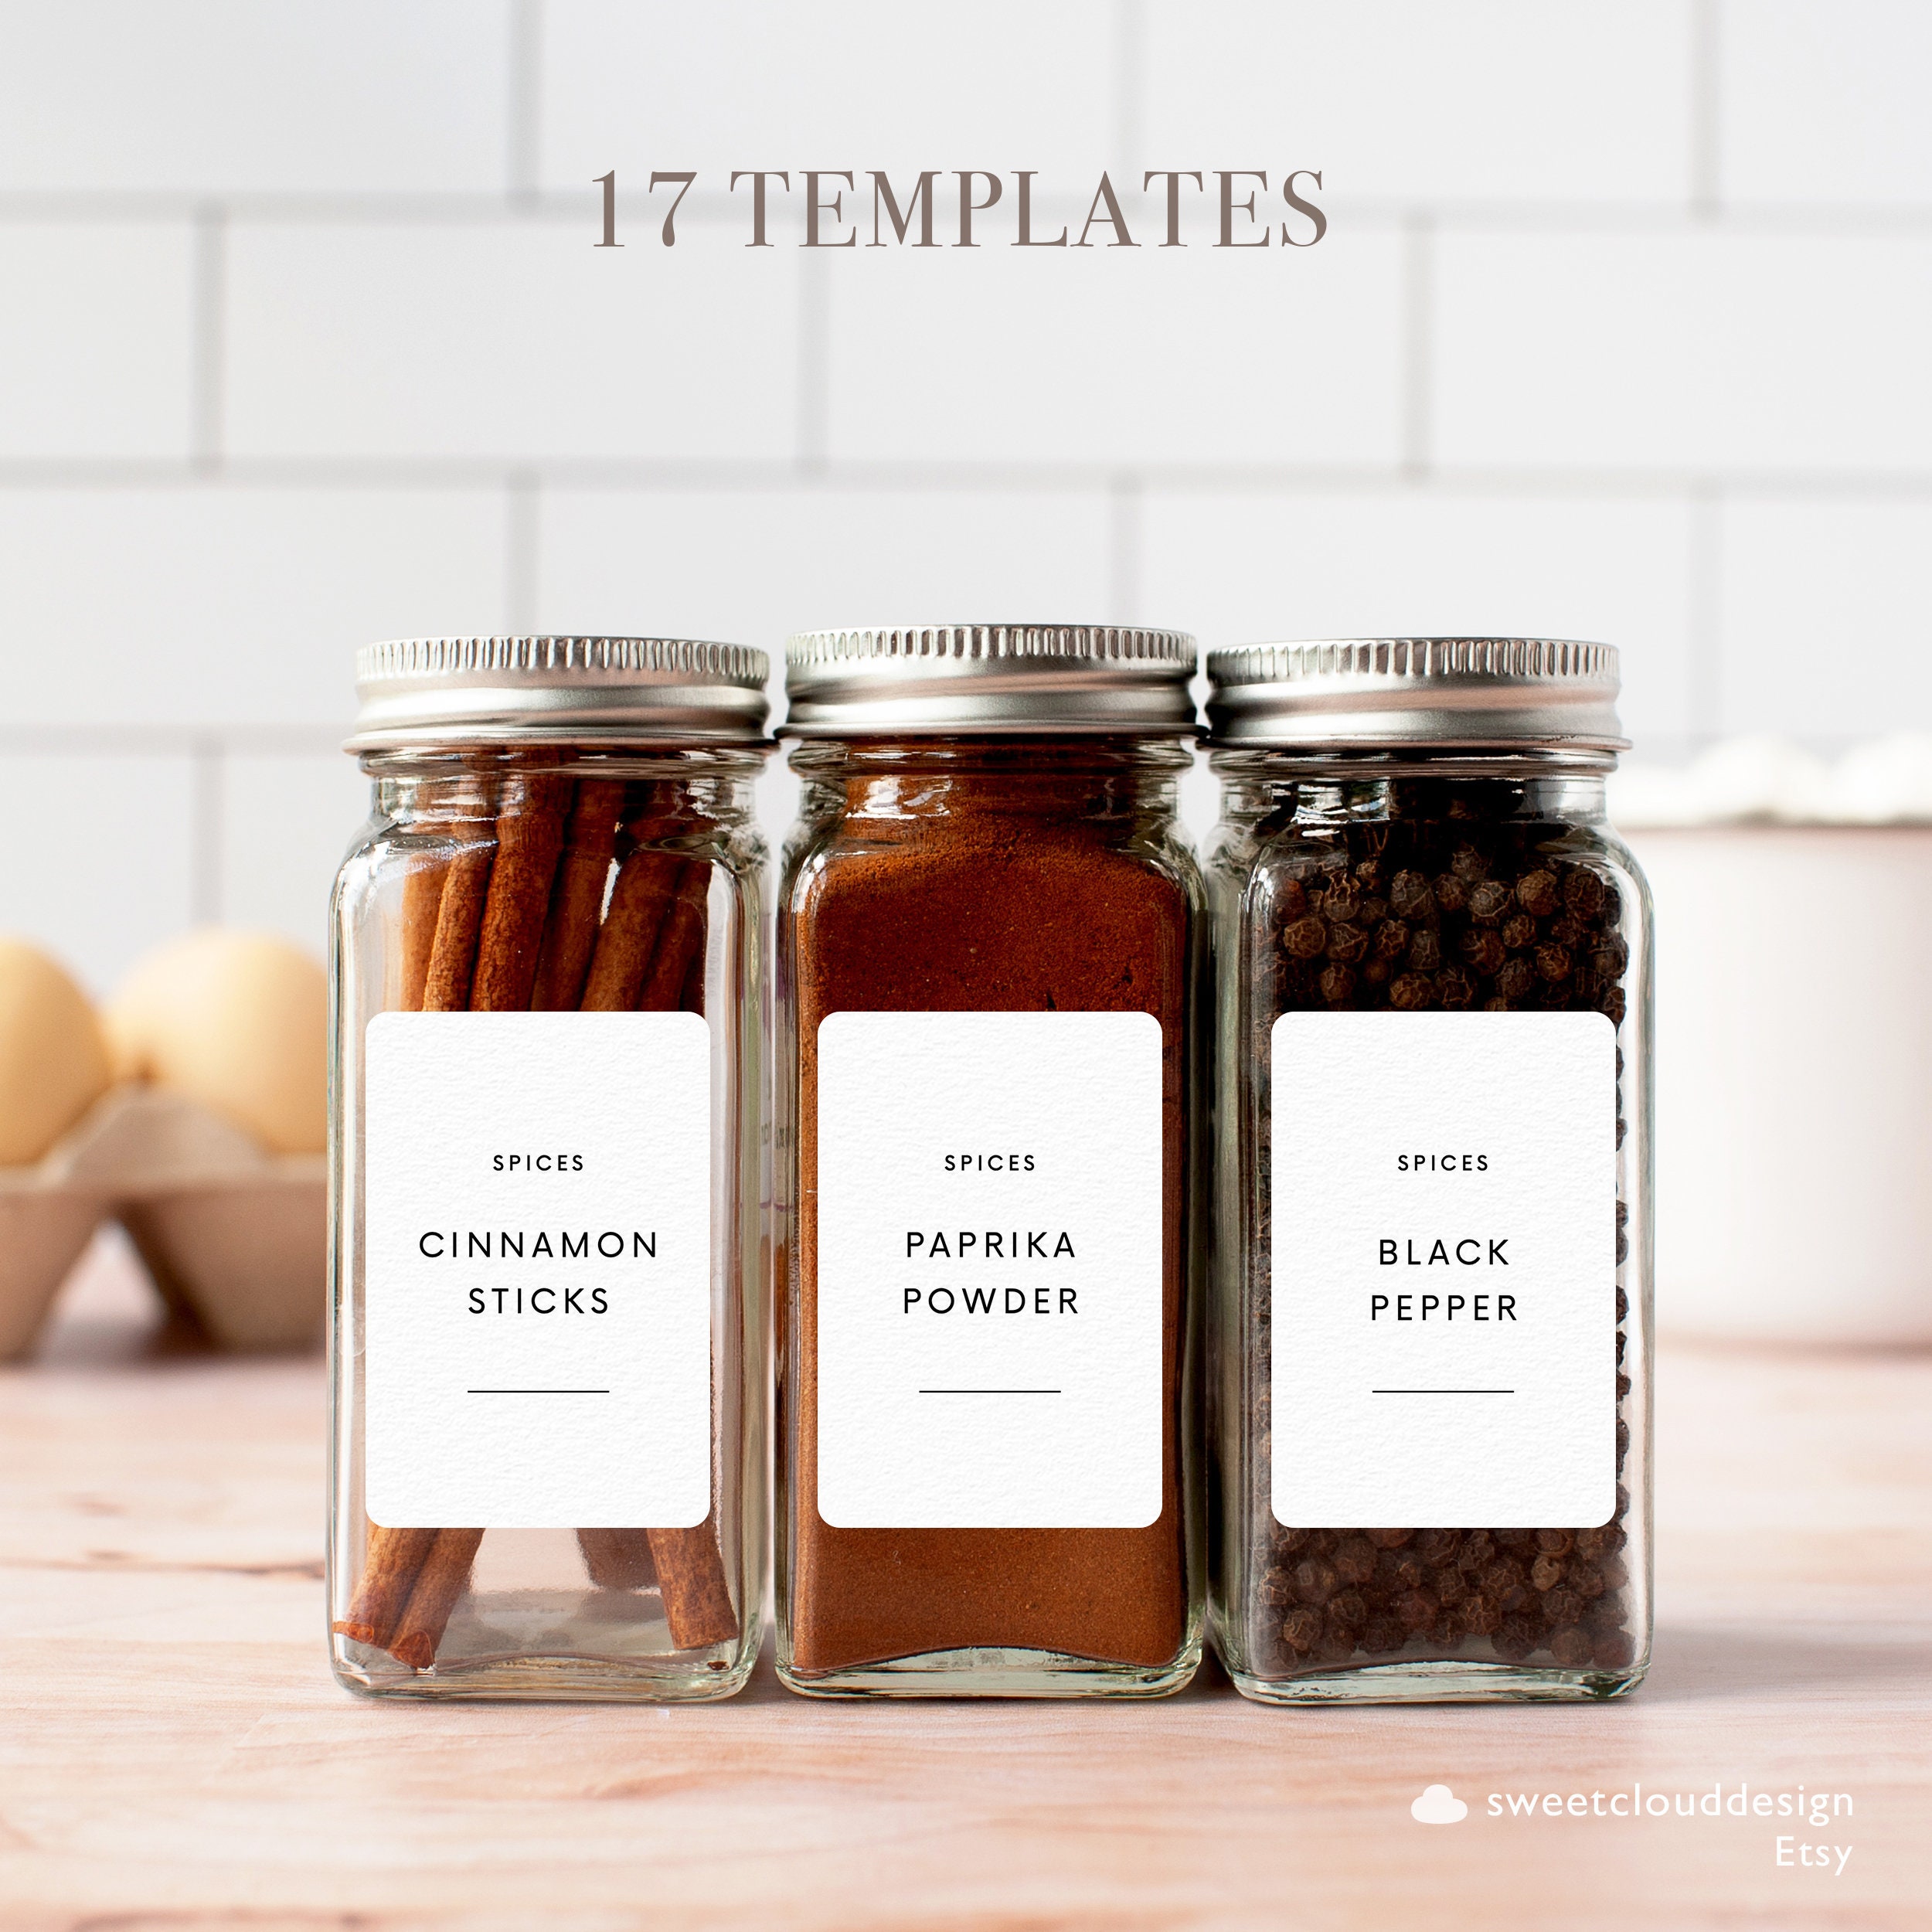 Talented Kitchen 140 Minimalist Spice Jar Labels, Preprinted, Water  Resistant Stickers (Black Text)